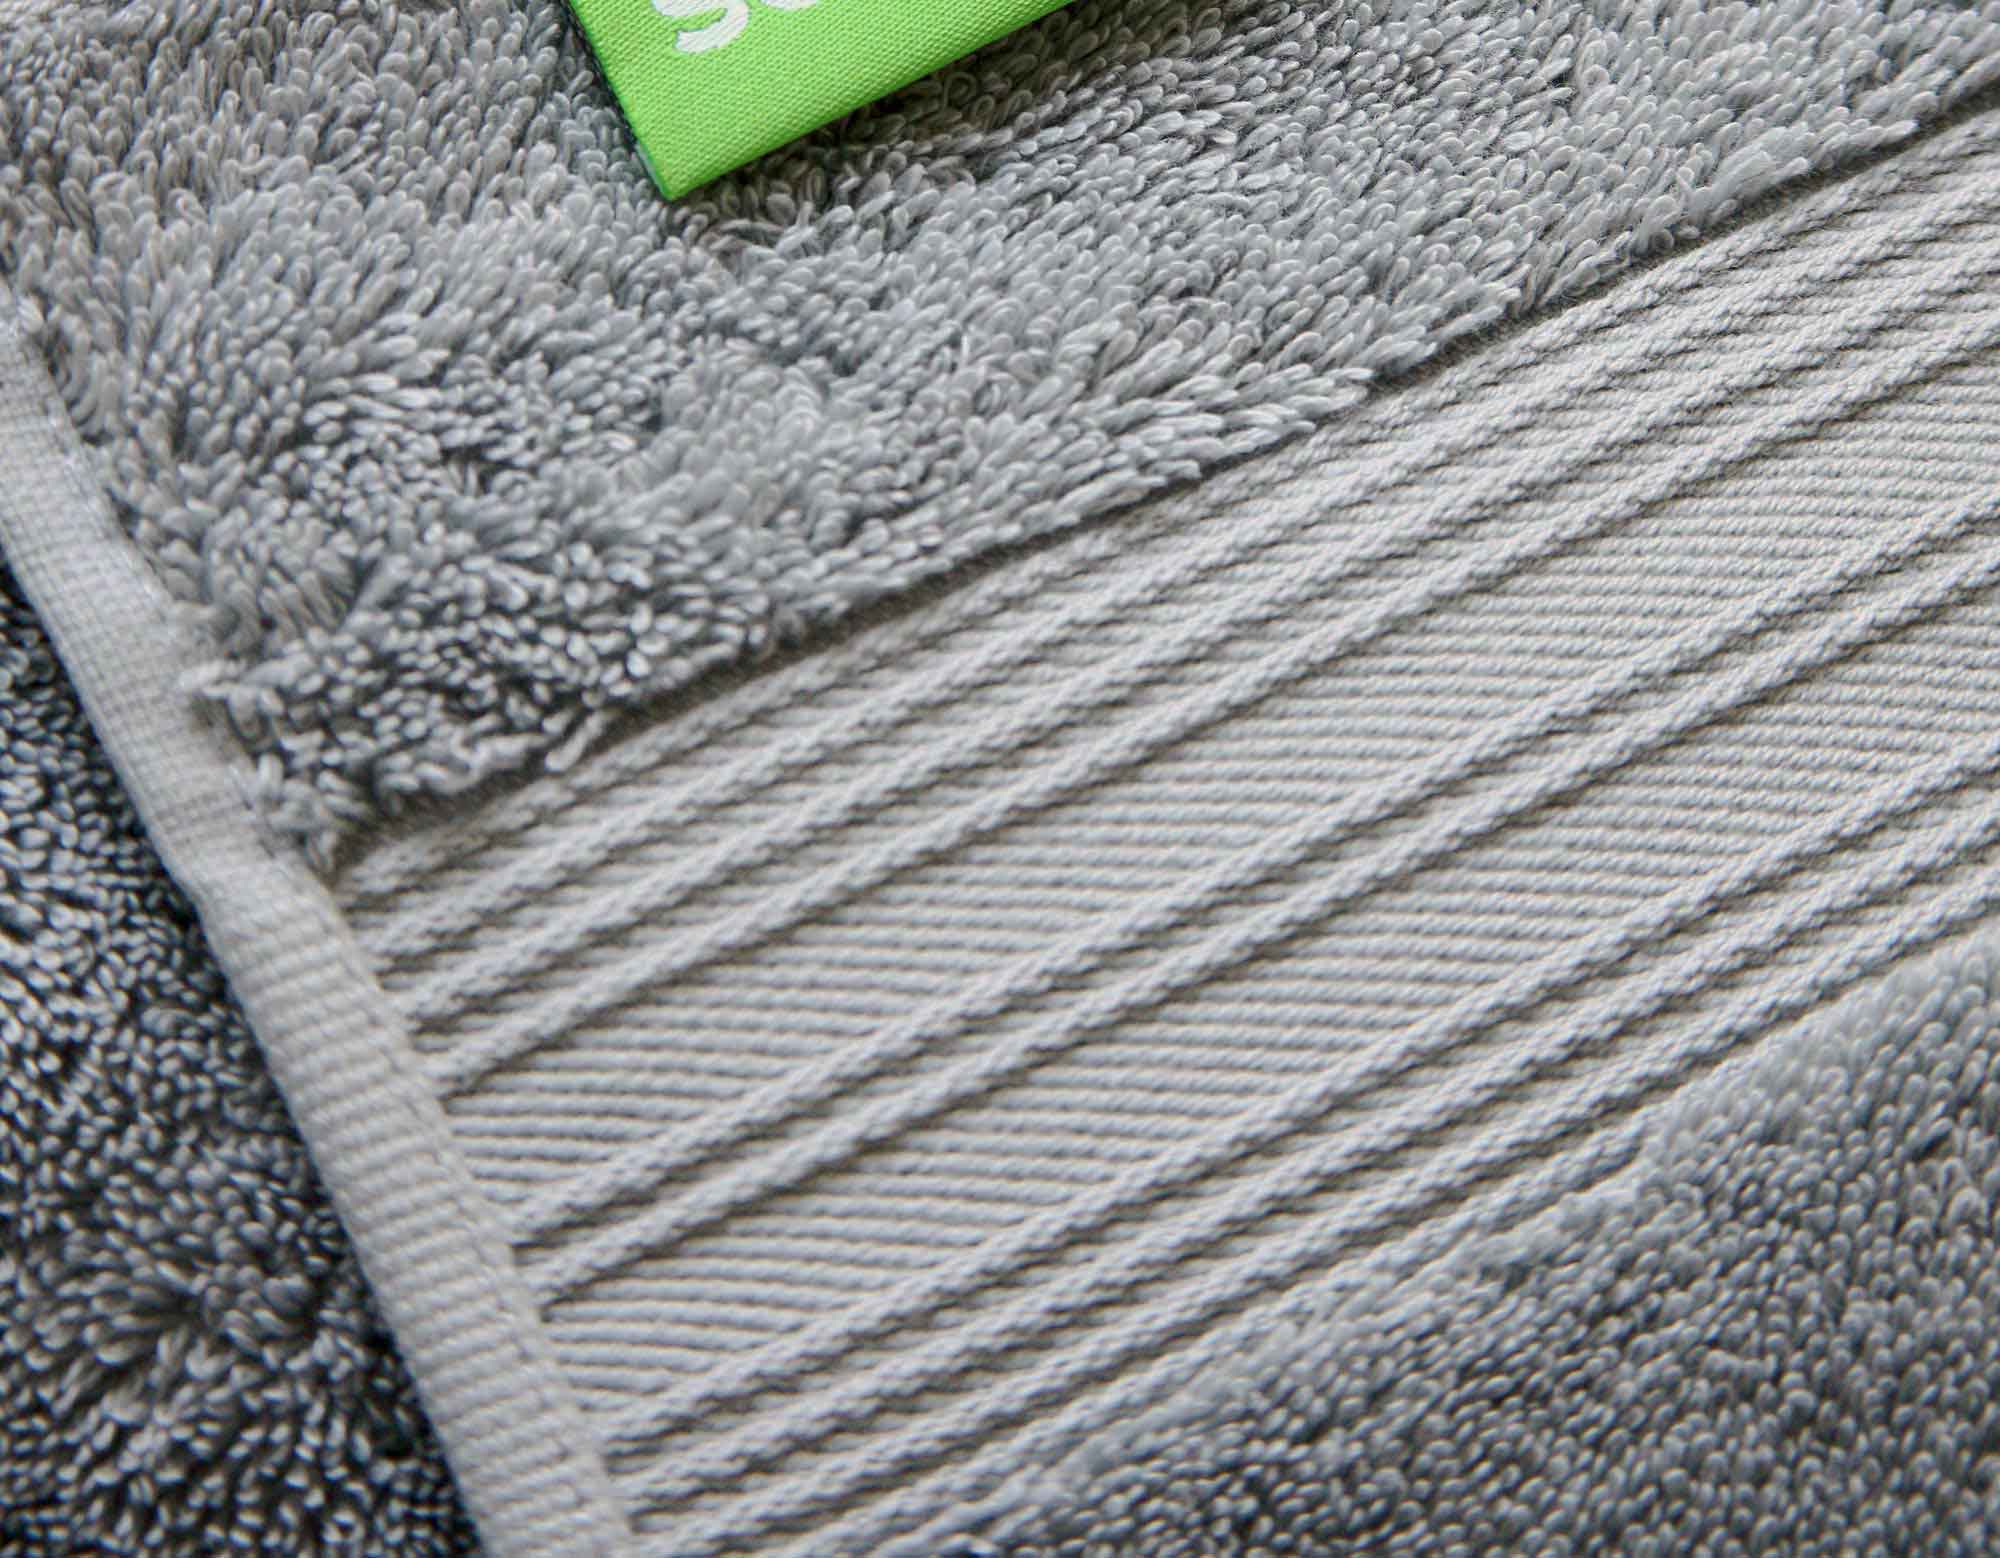 Cairo Supersoft Bath Sheet & Hand Towel Bundle - Egyptian cotton - Sag –  DUSK